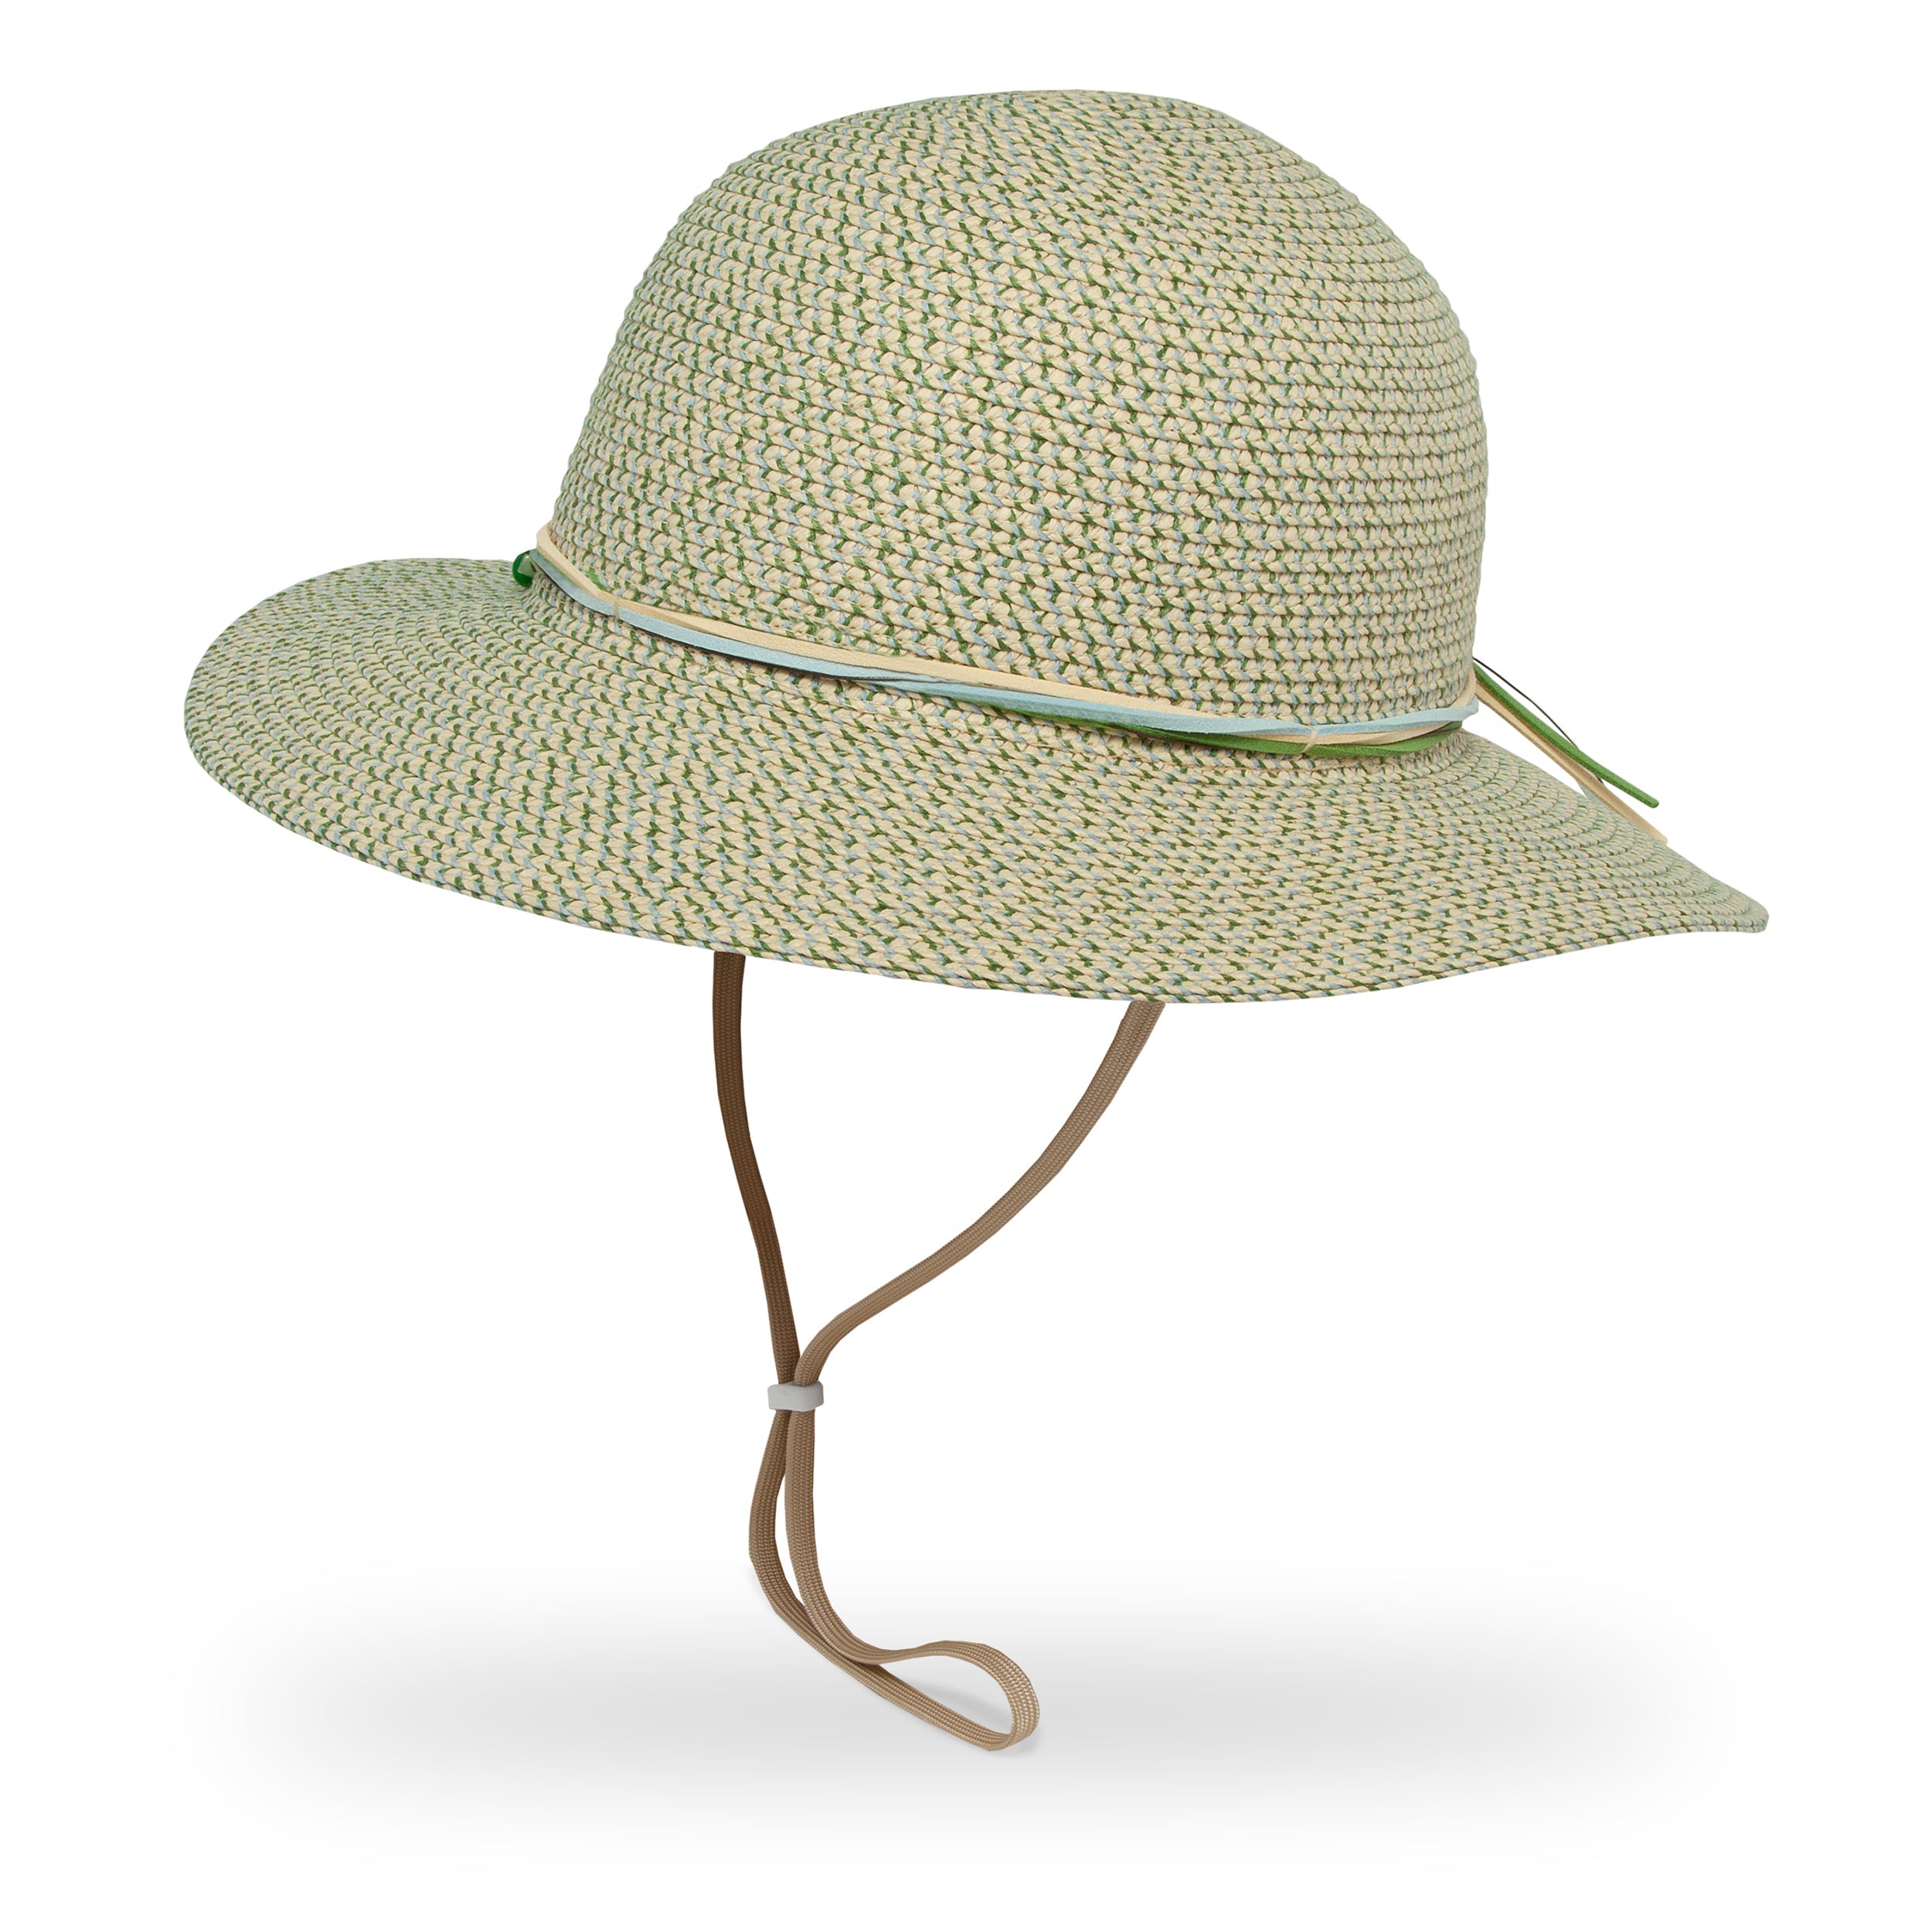  Avid Hat